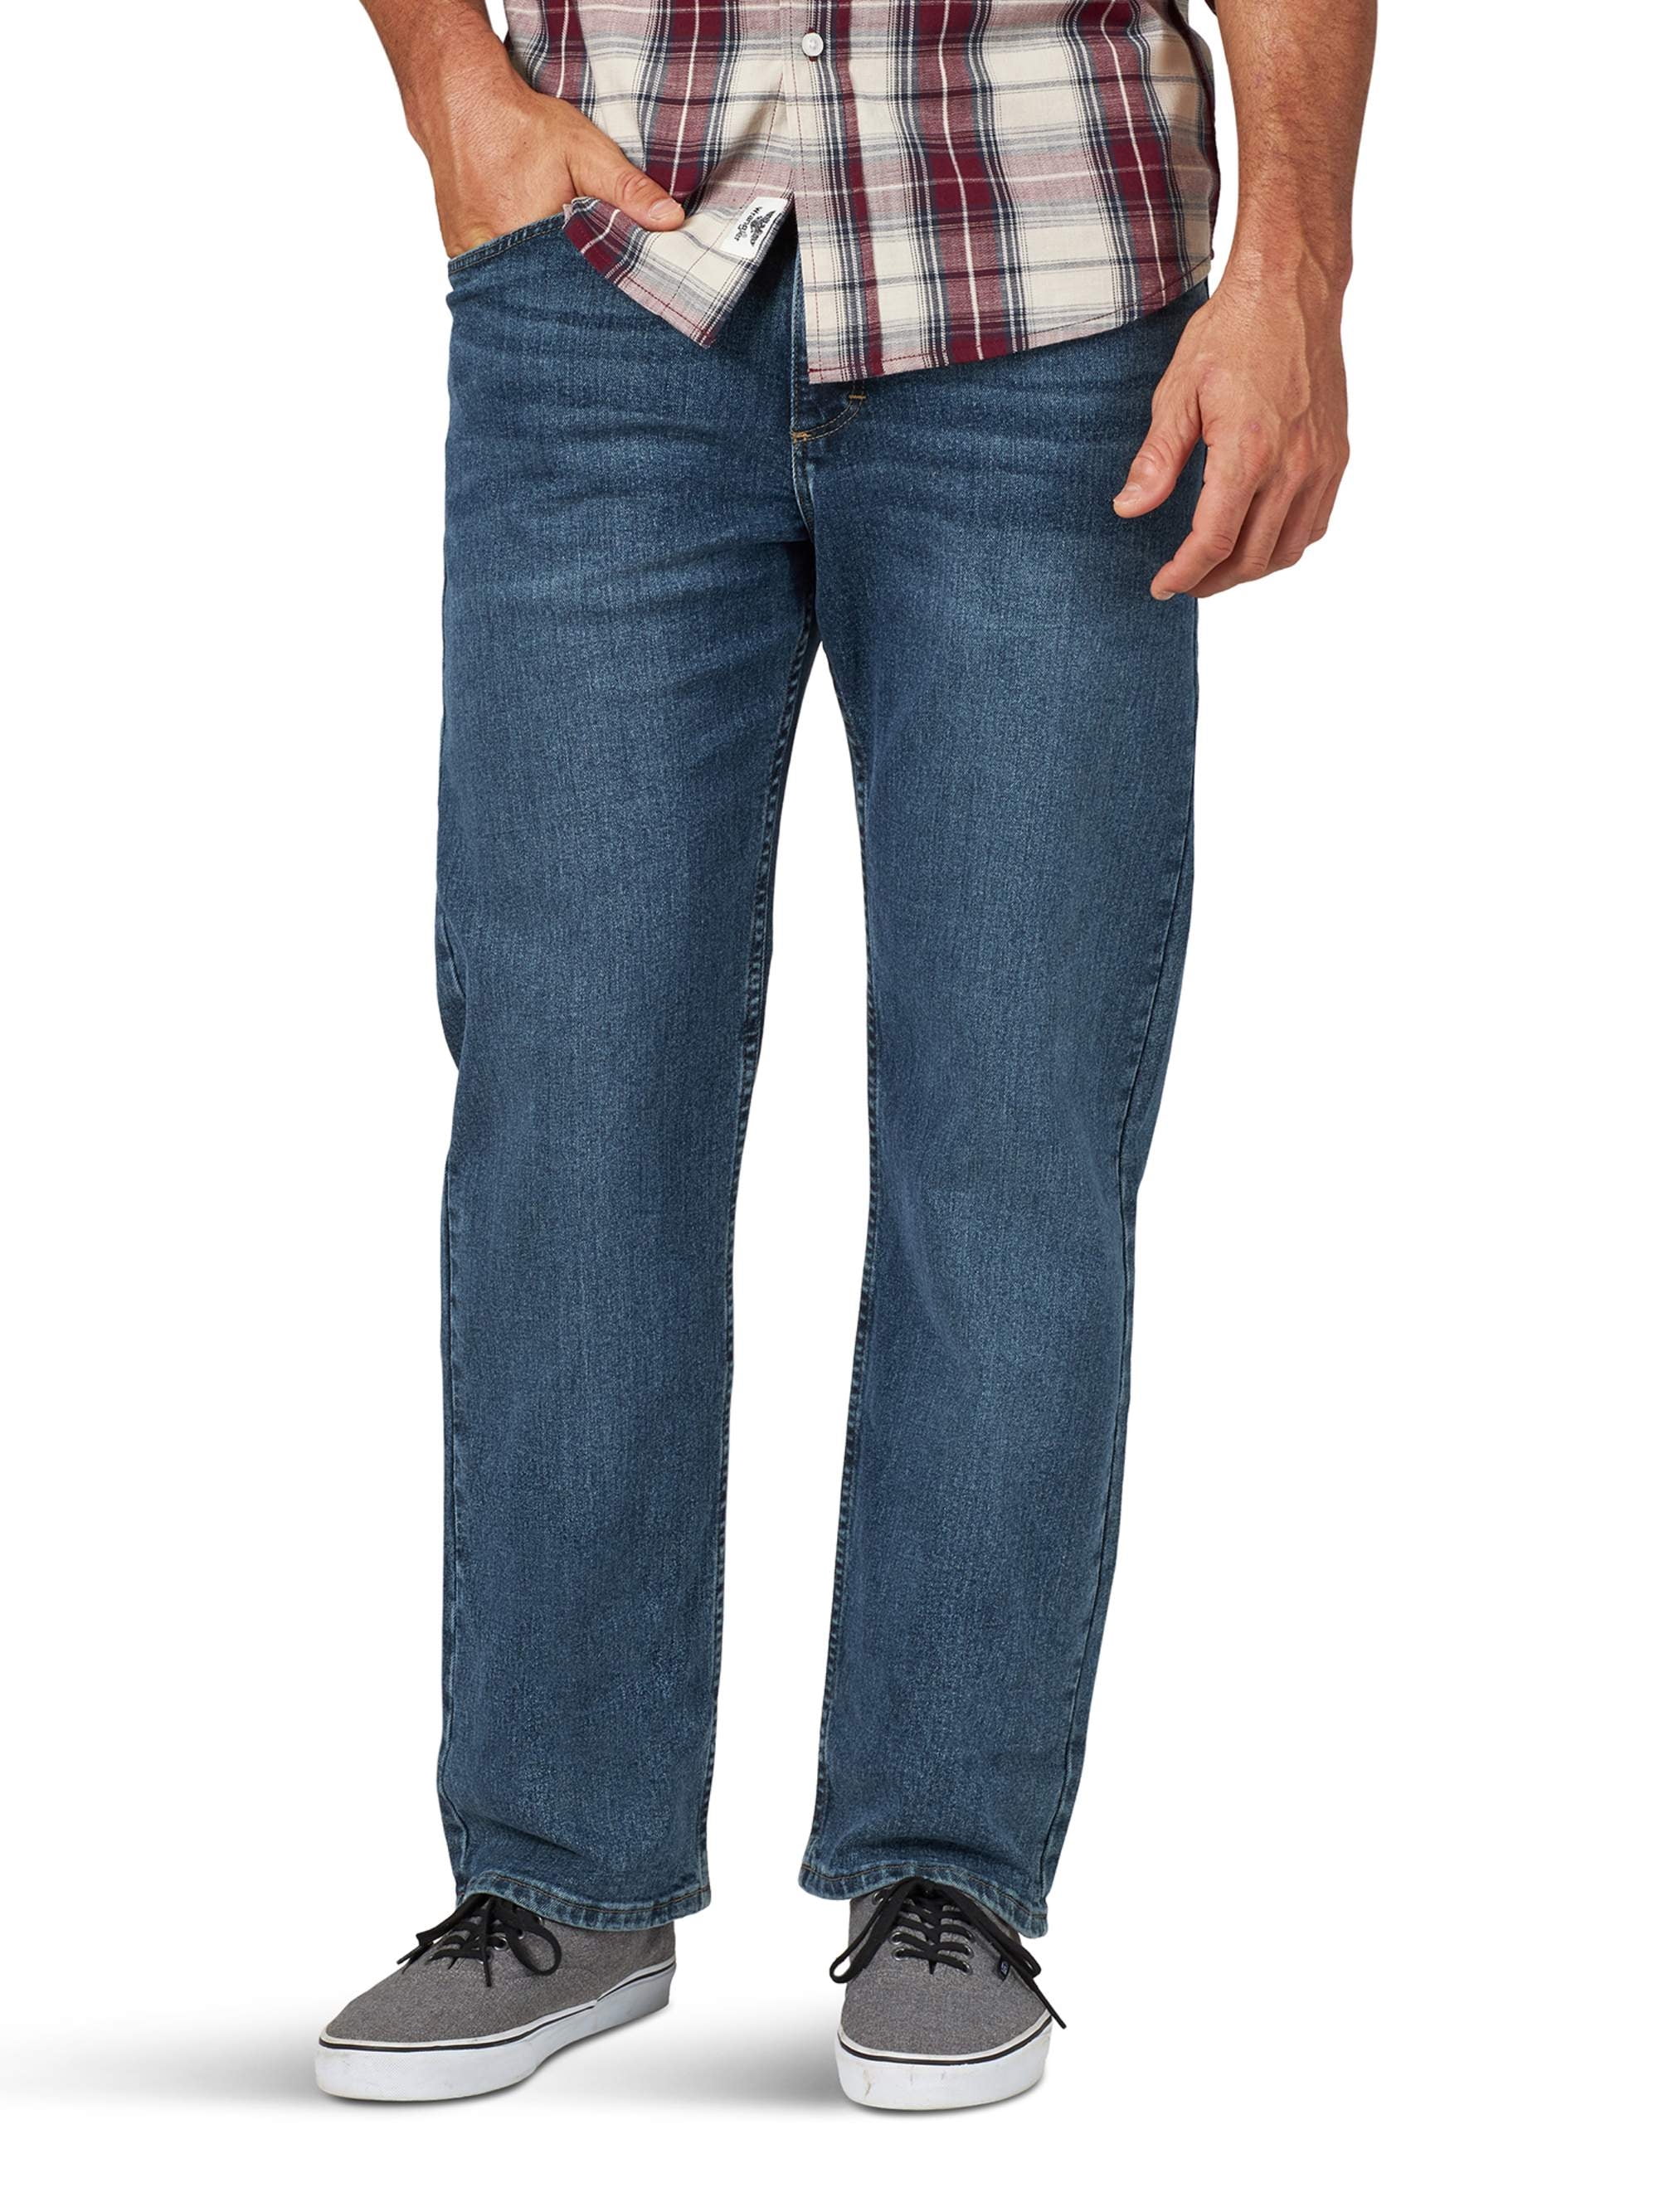 wrangler jeans performance series